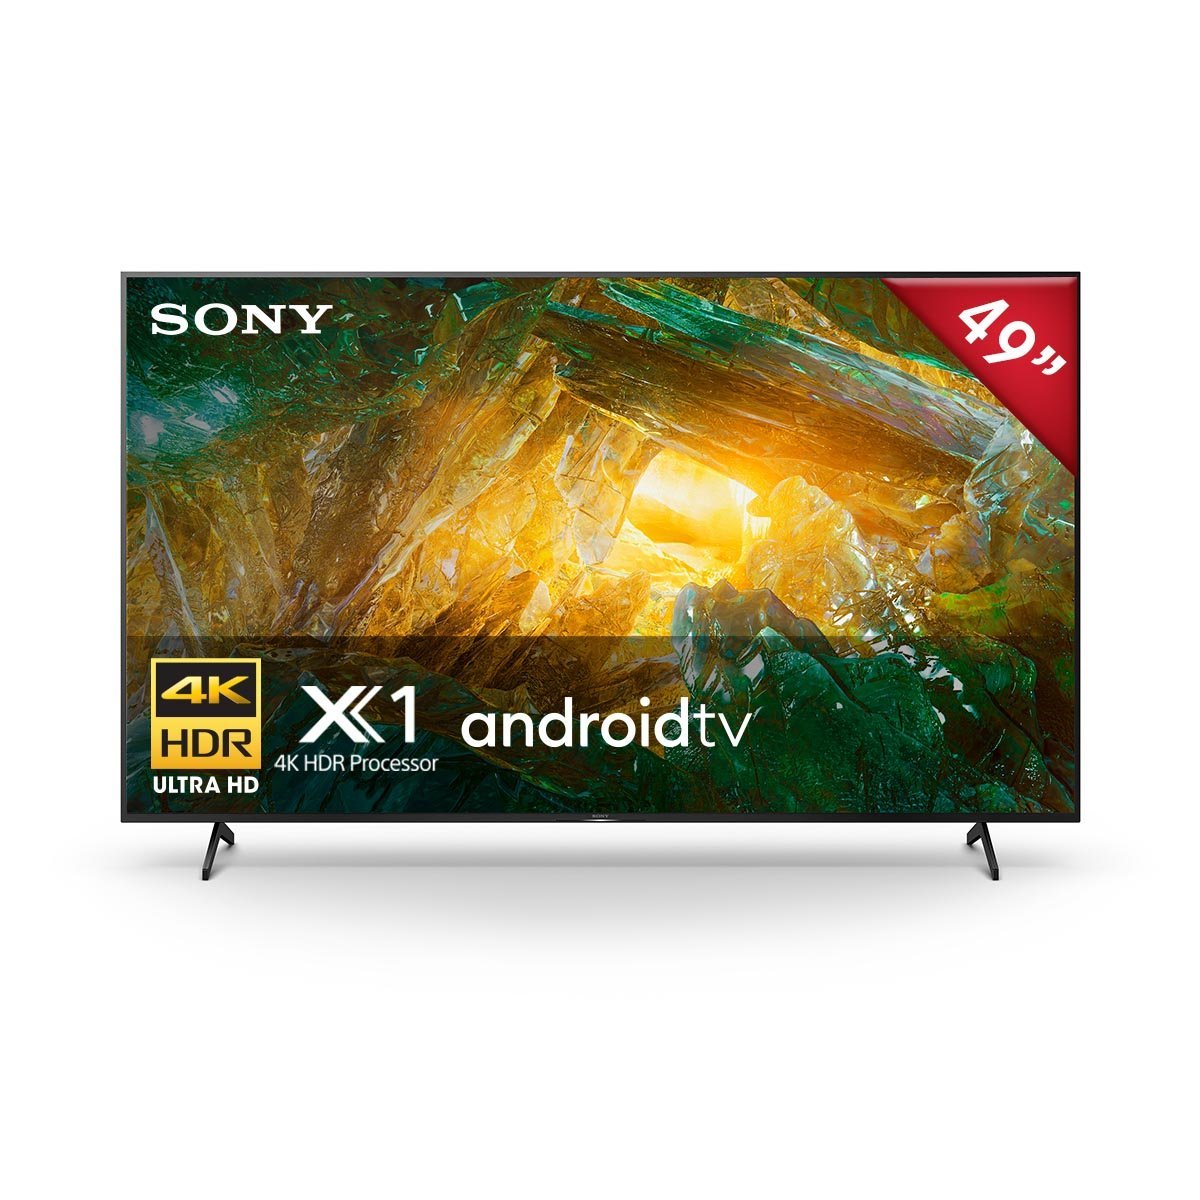 Pantalla Sony 49" 4K Uhd Android Tv Xbr49X800H